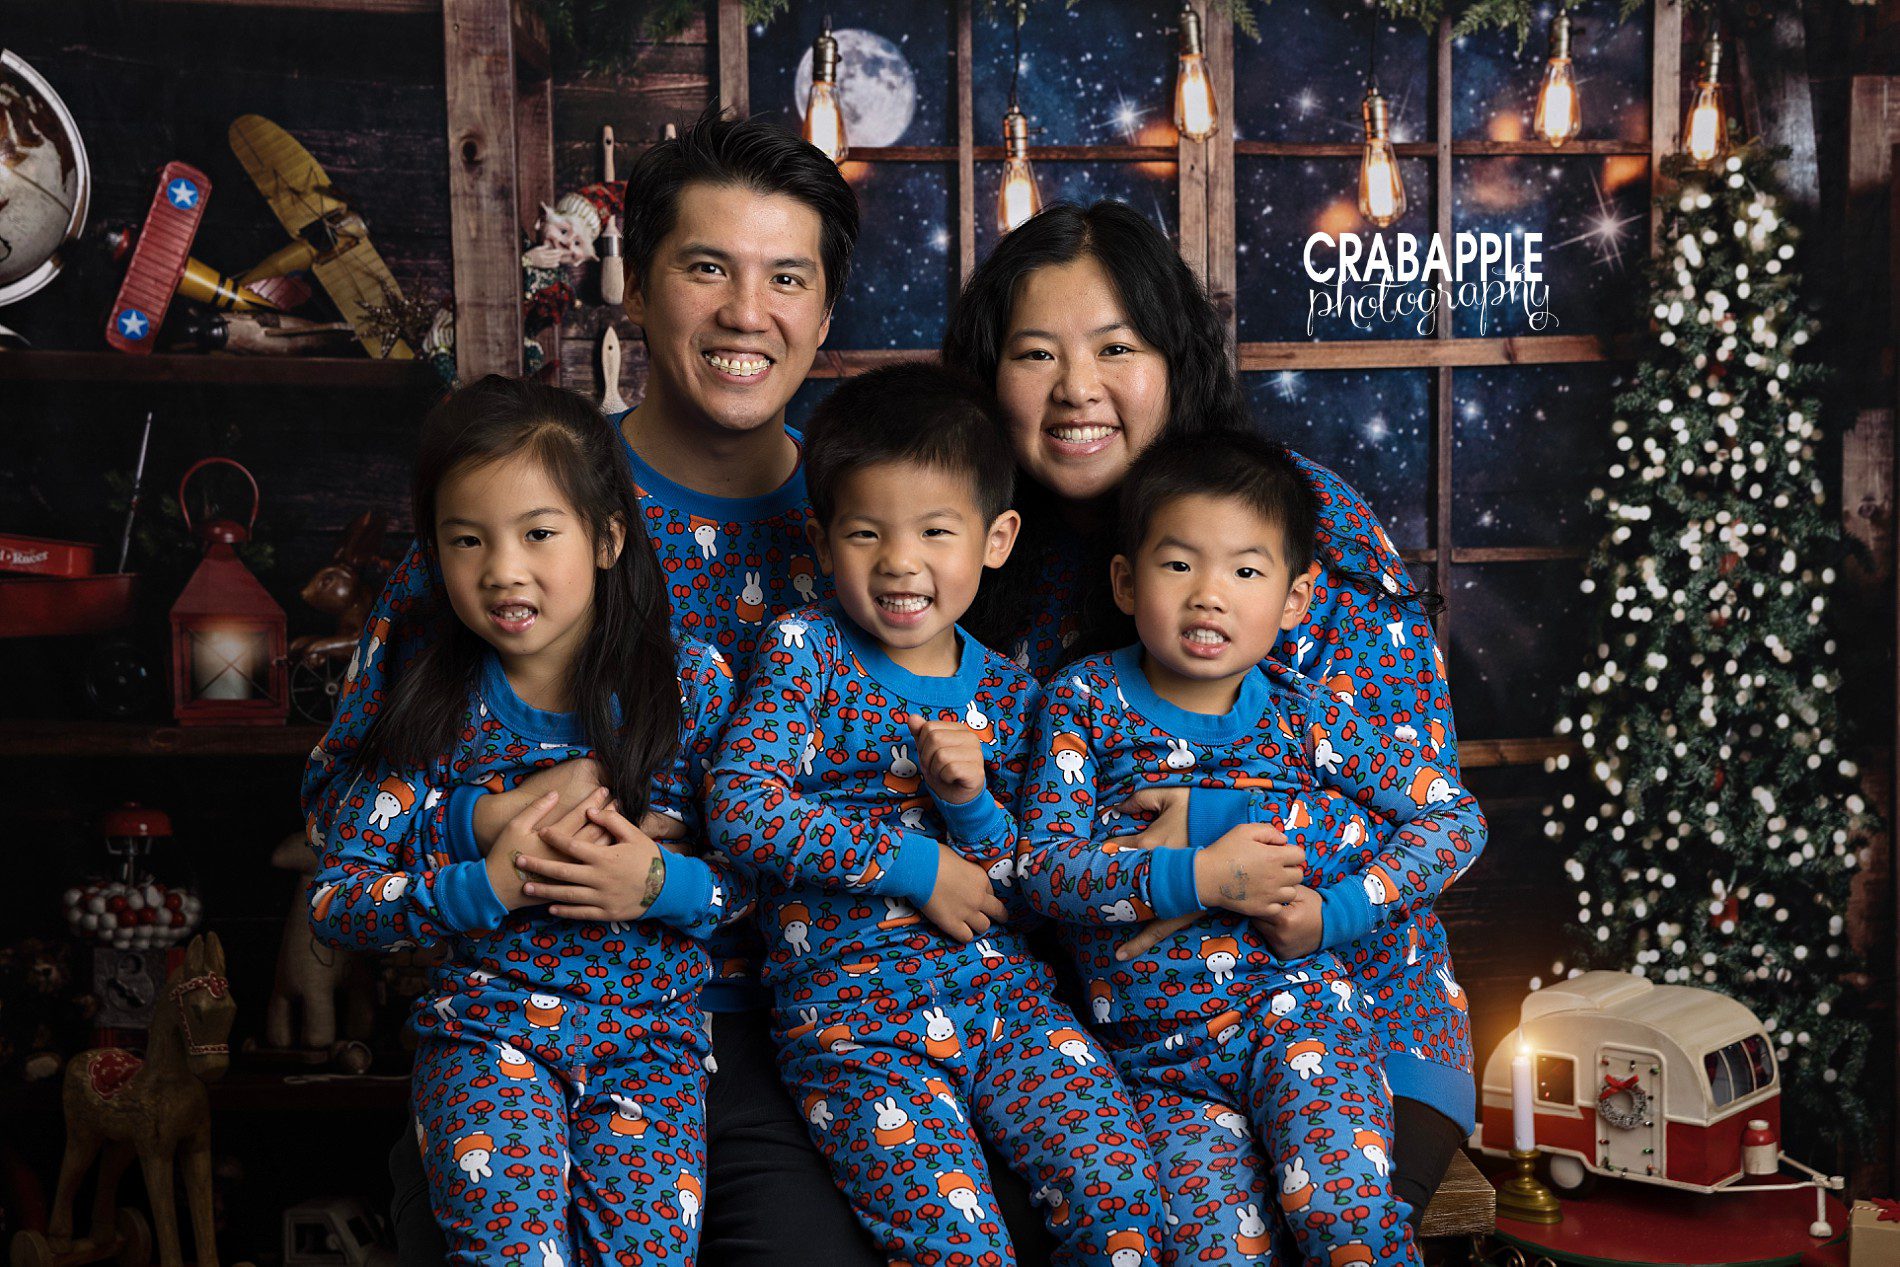 xmas family photos with matching pajamas ideas for christmas cards